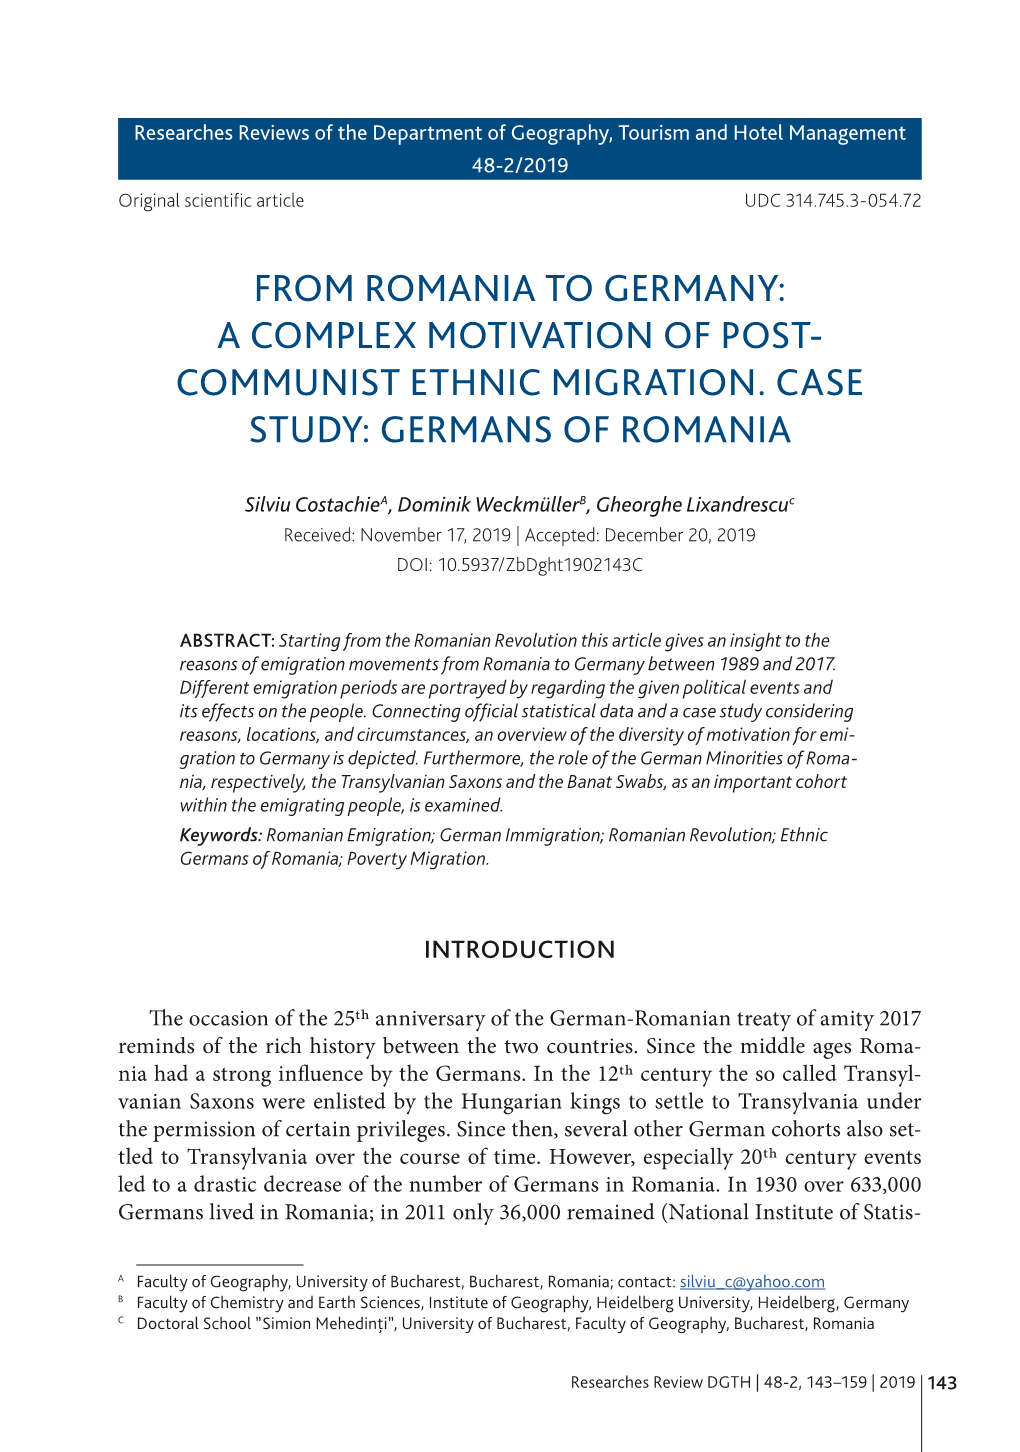 Communist Ethnic Migration. Case Study: Germans of Romania